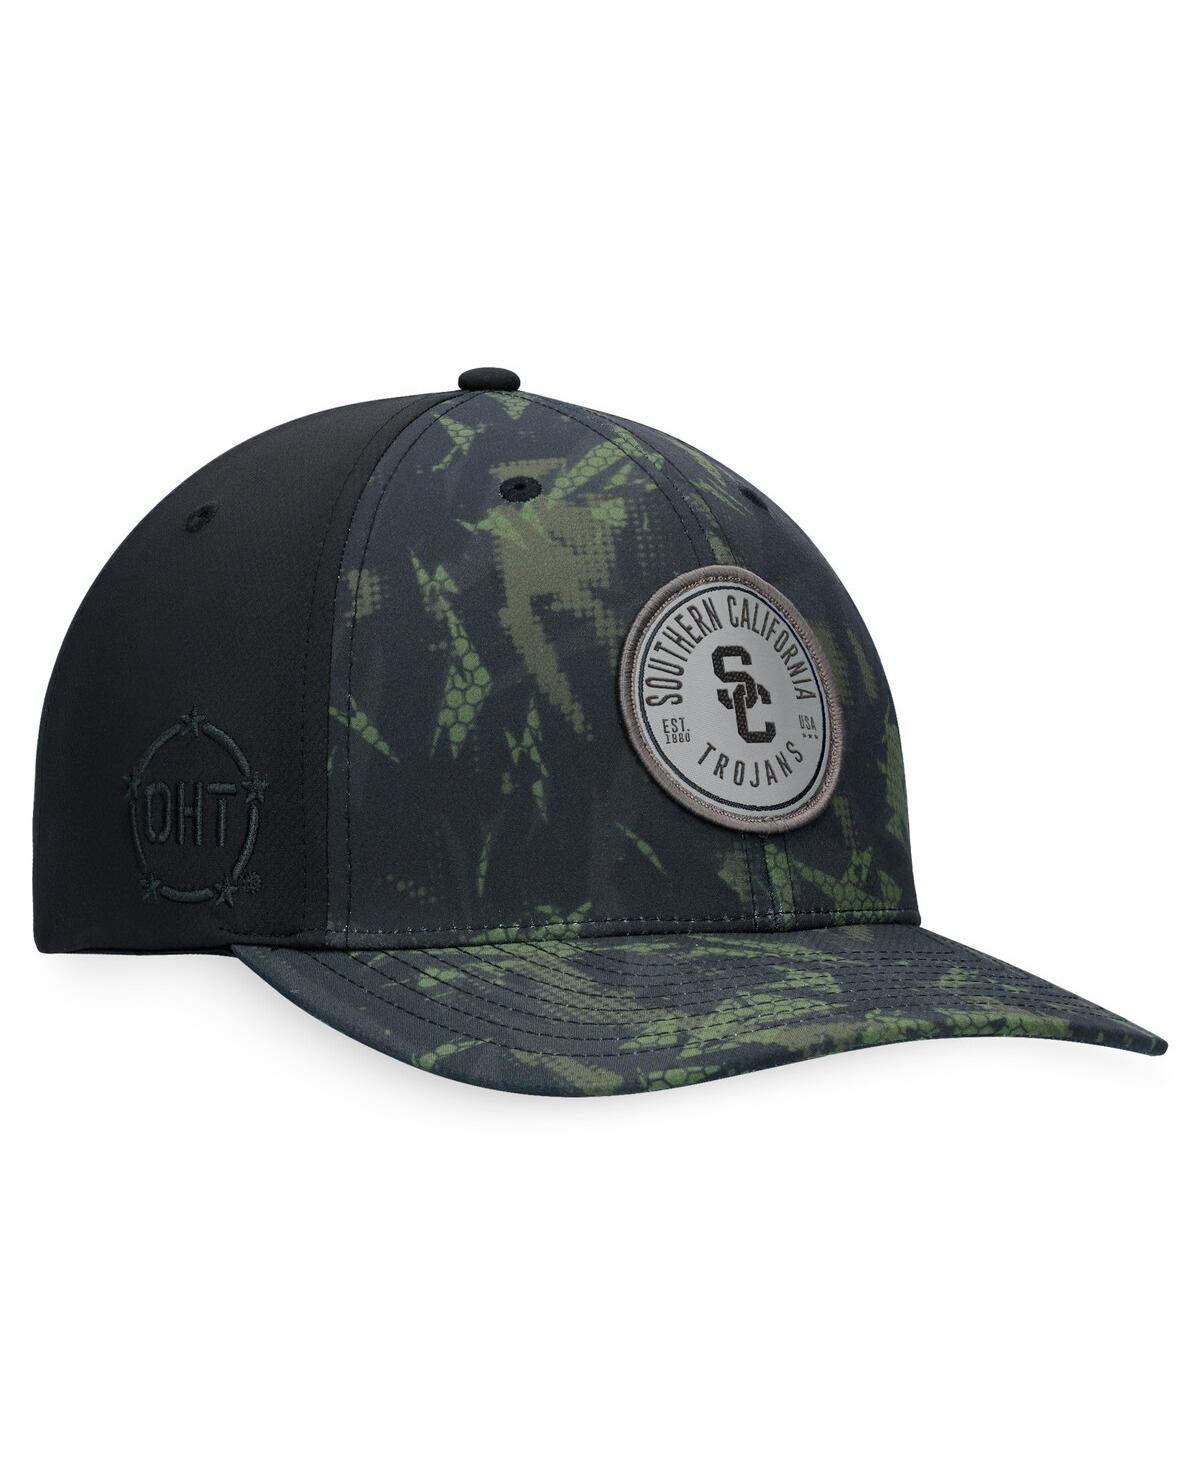 Shop Top Of The World Men's  Black Usc Trojans Oht Military-inspired Appreciation Camo Render Flex Hat